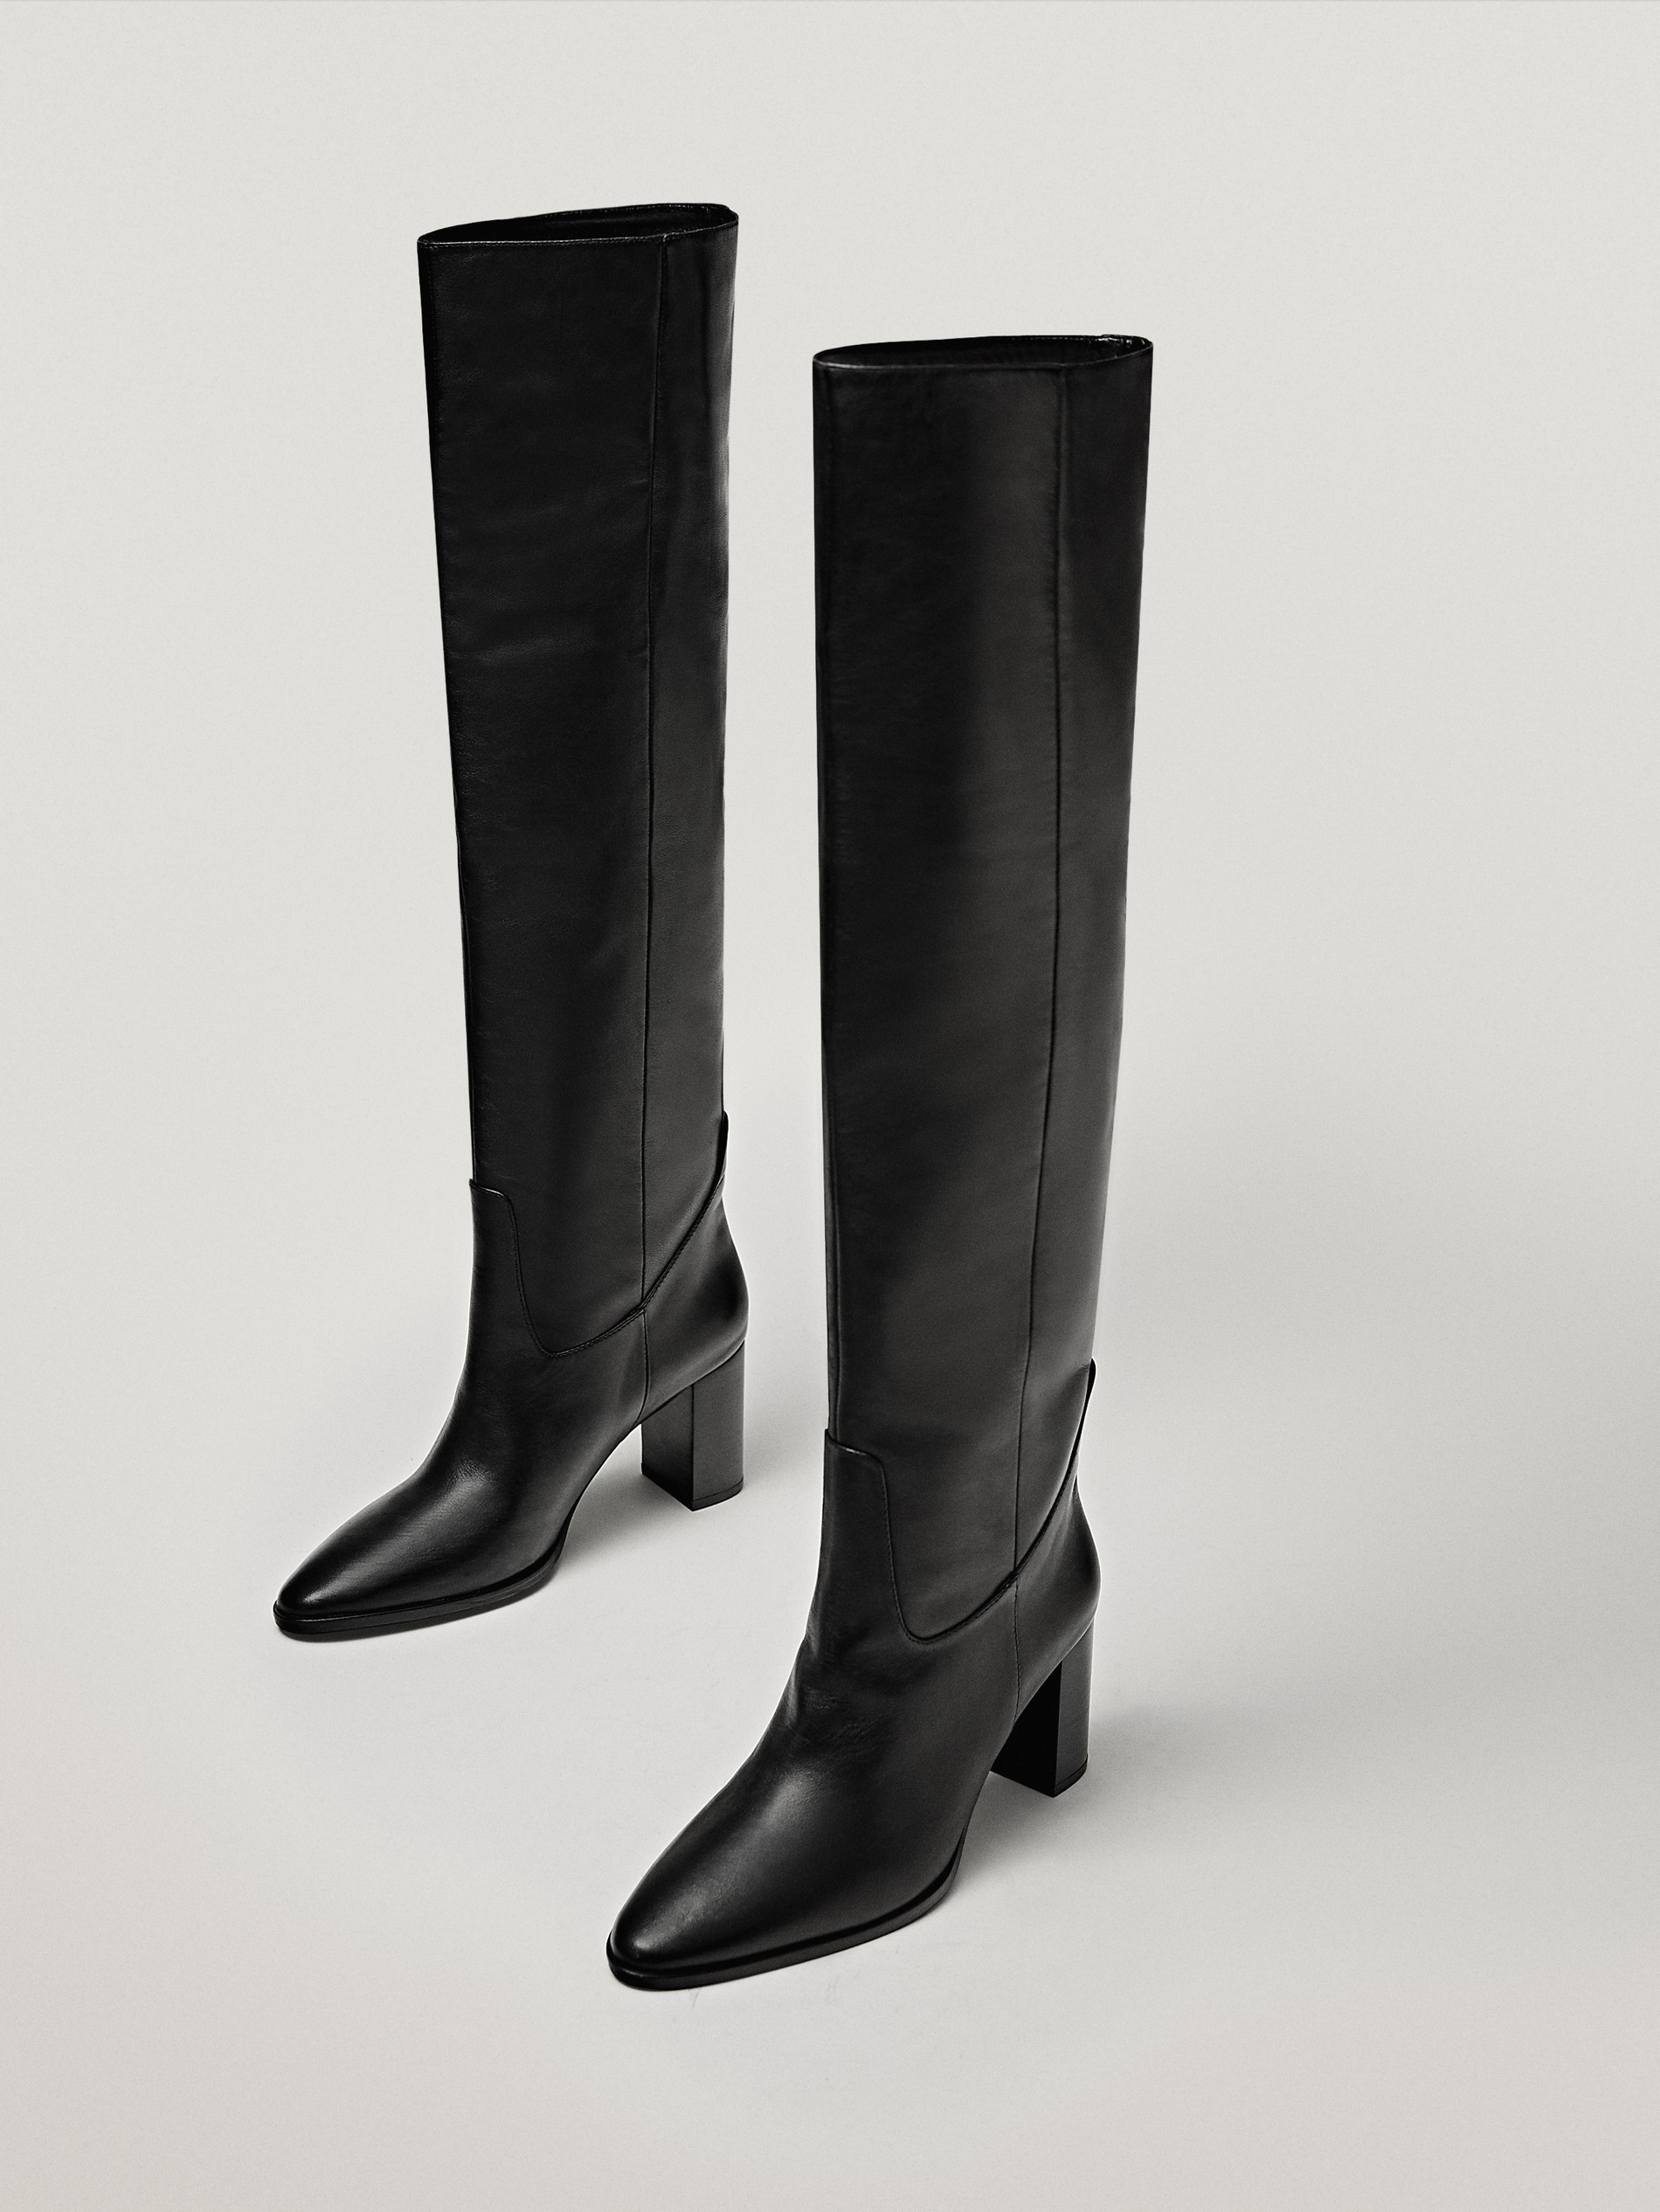 heeled black leather booties